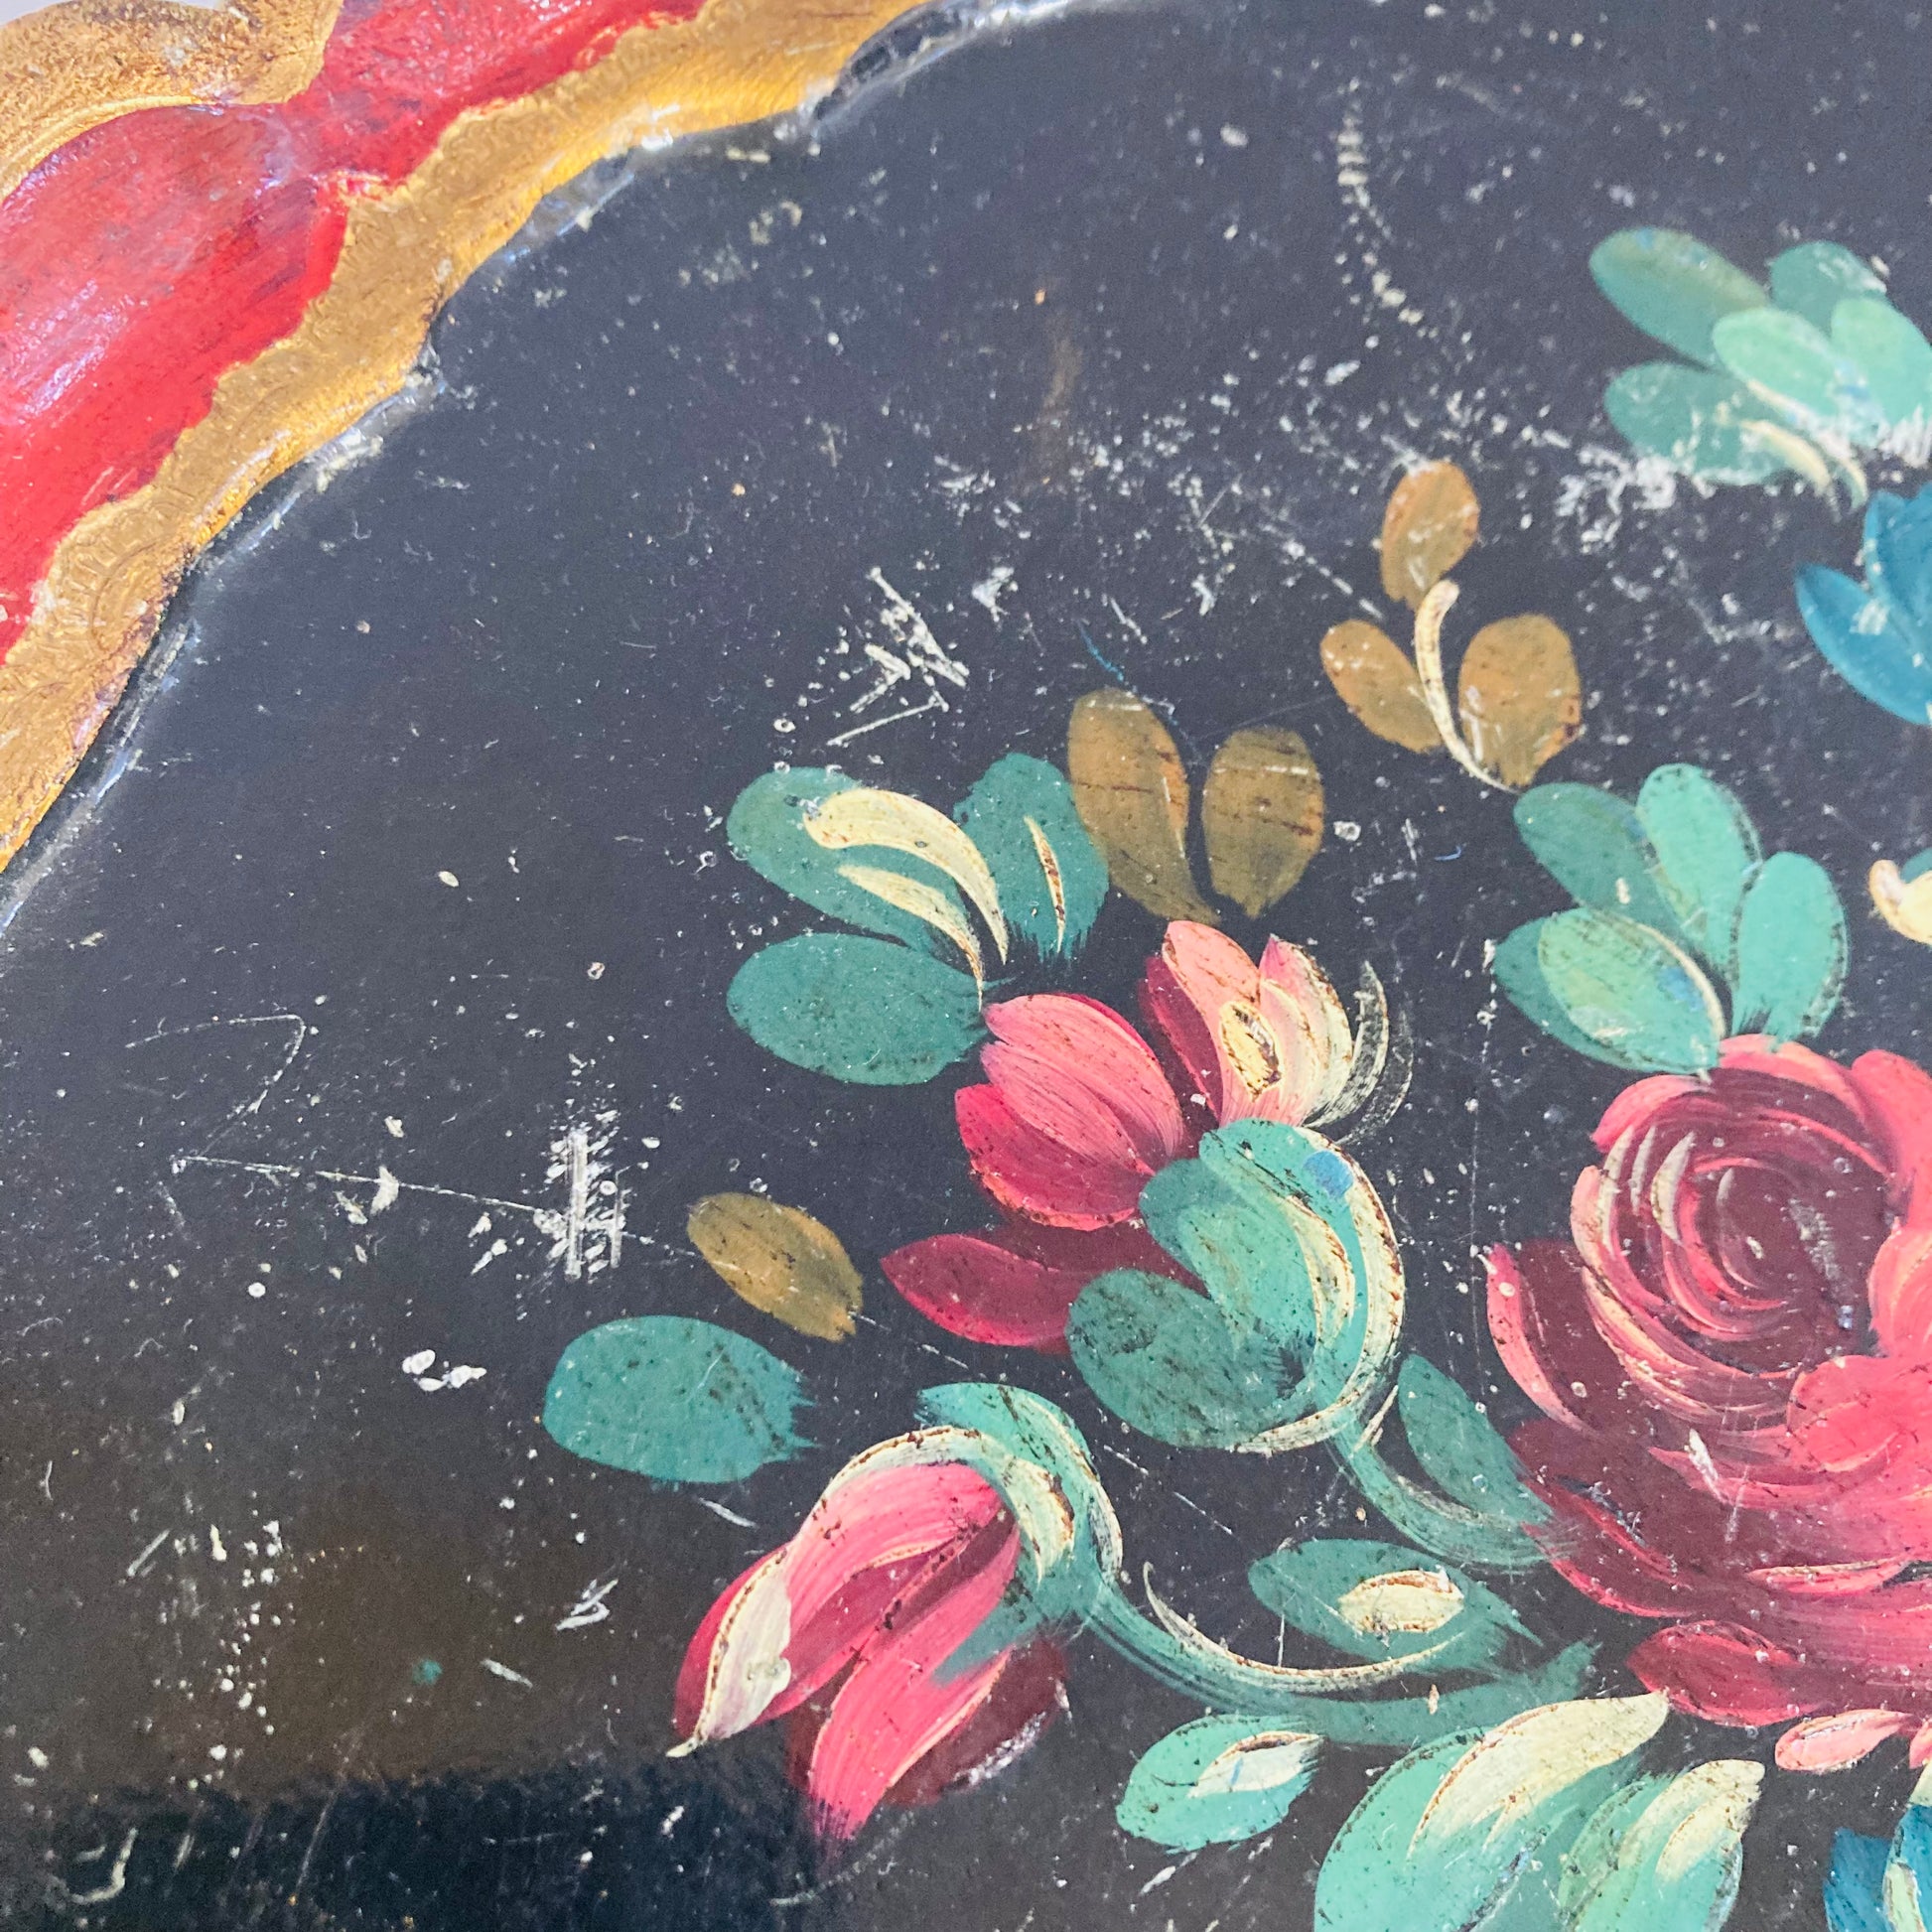 Vintage Florentine Paper Mache Tray | Black Floral Decorative Italian Tray